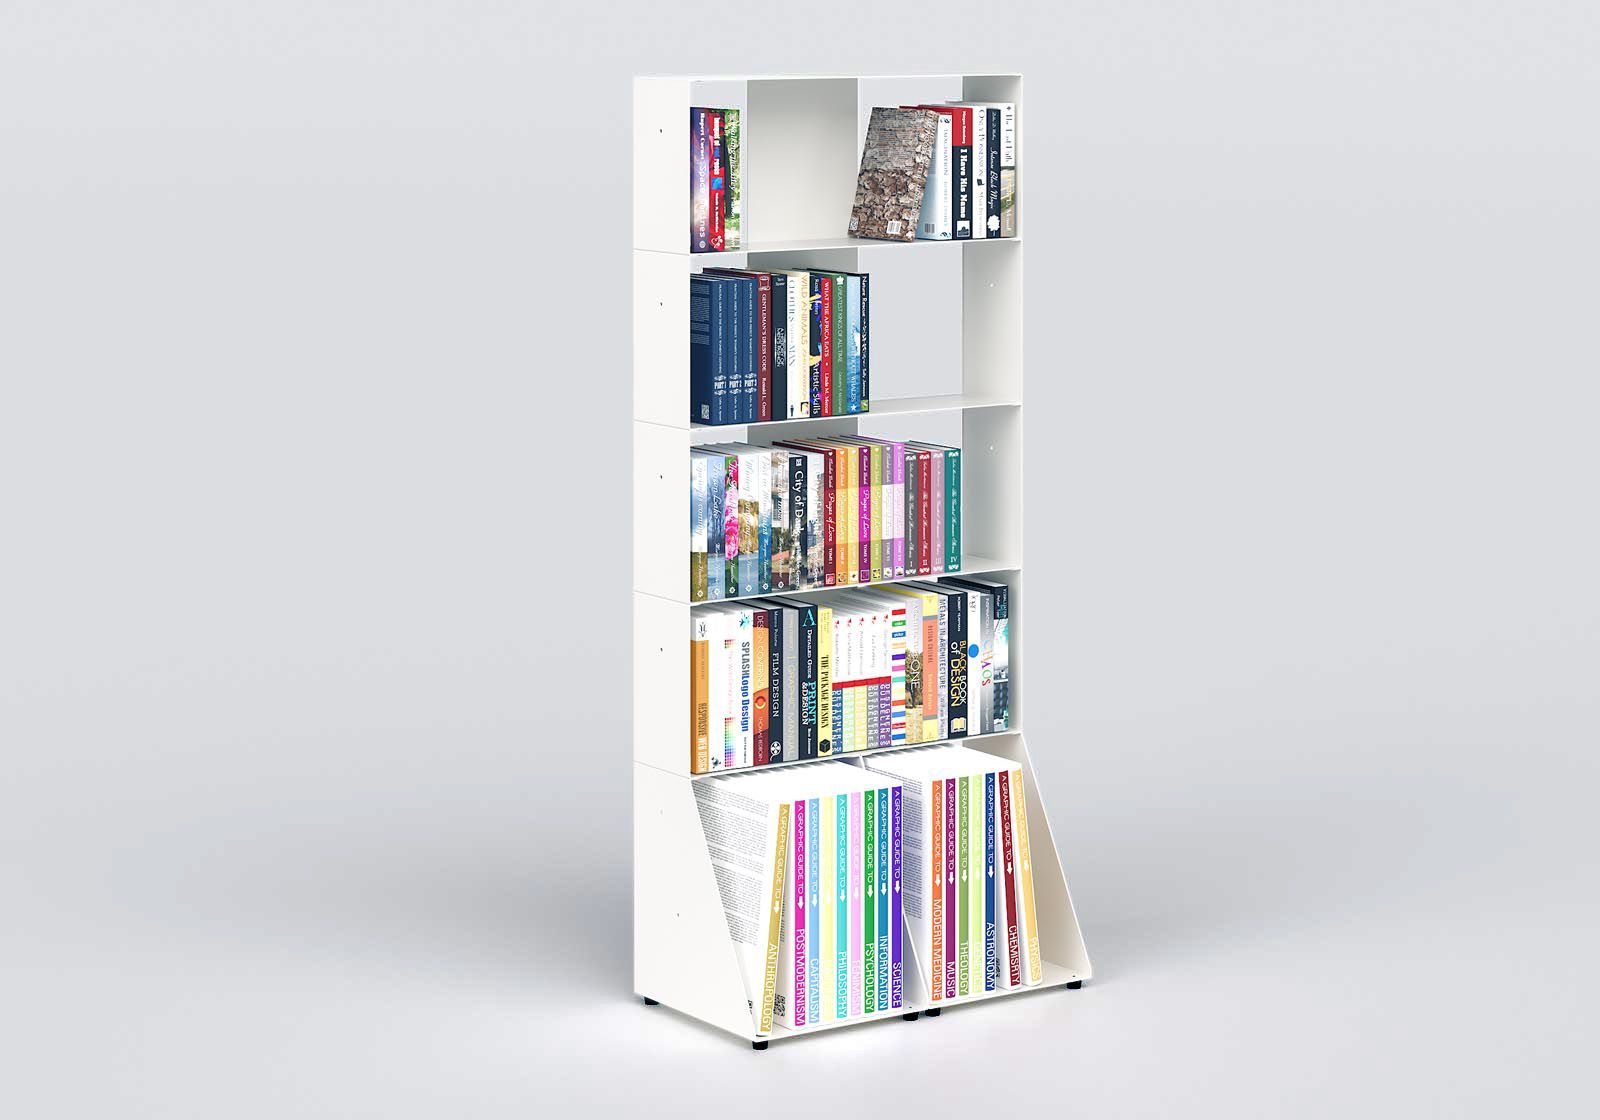 White Bookcase W60 H135 D32 cm - 5 shelves